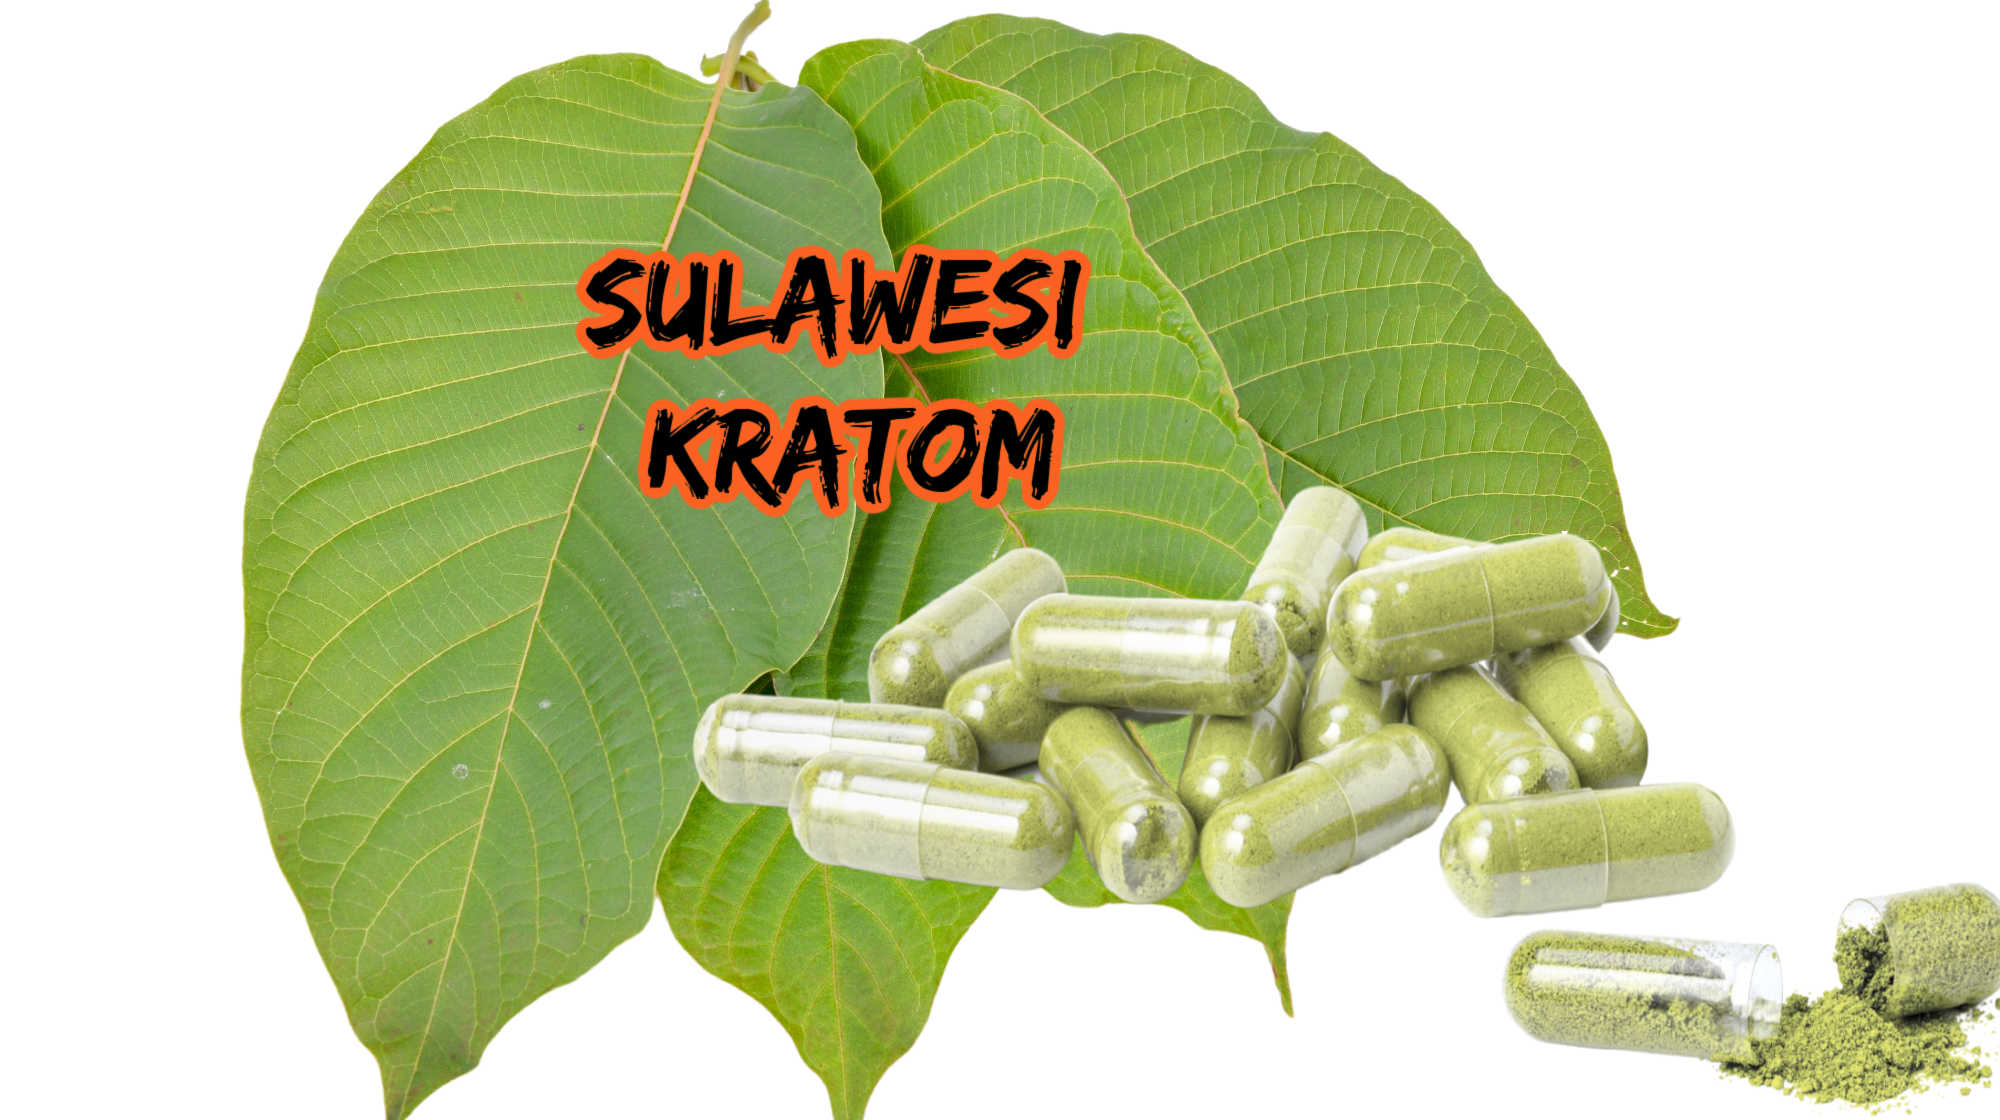 image of sulawesi kratom